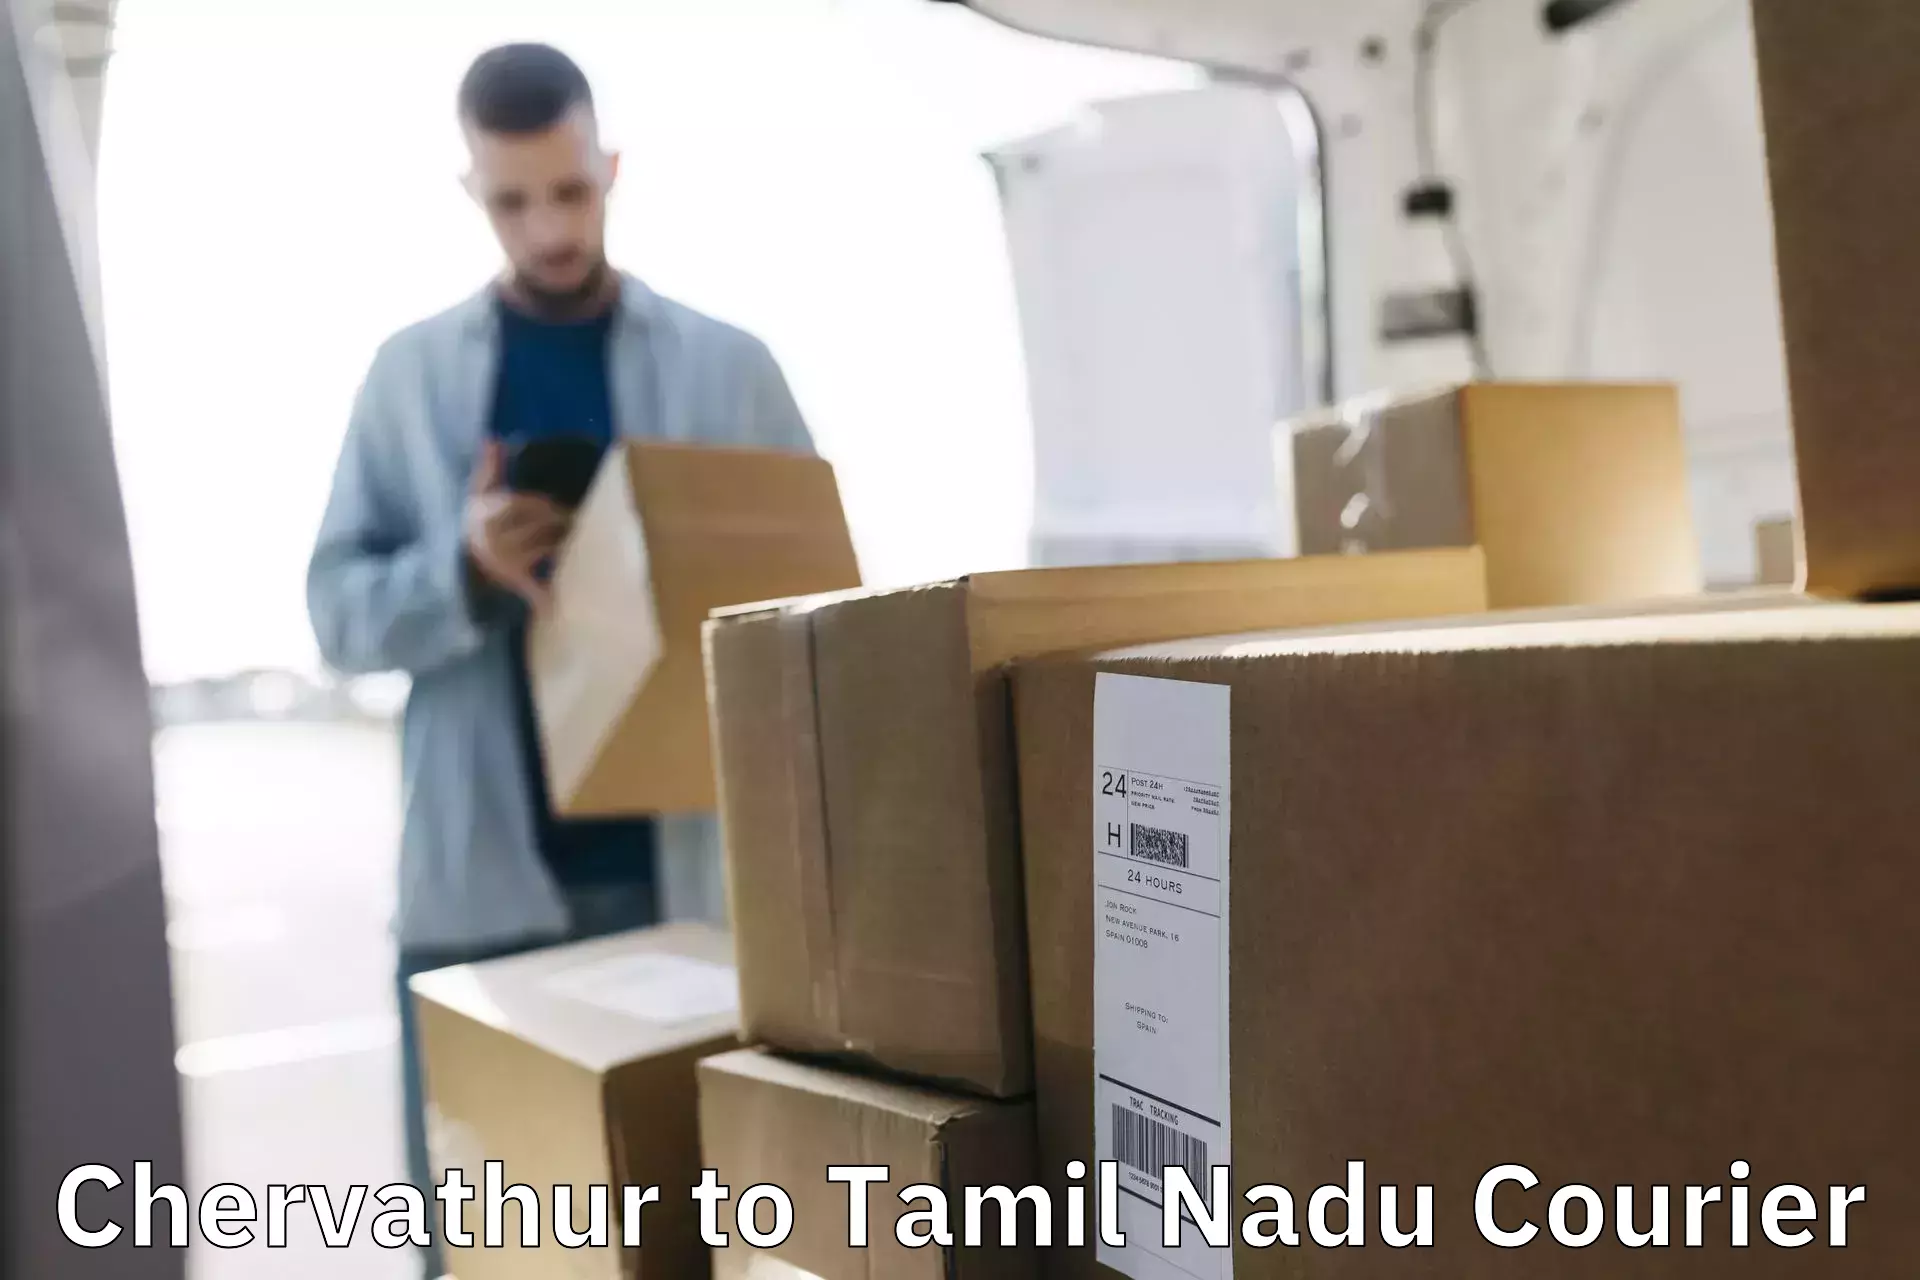 Doorstep delivery service Chervathur to Ambattur